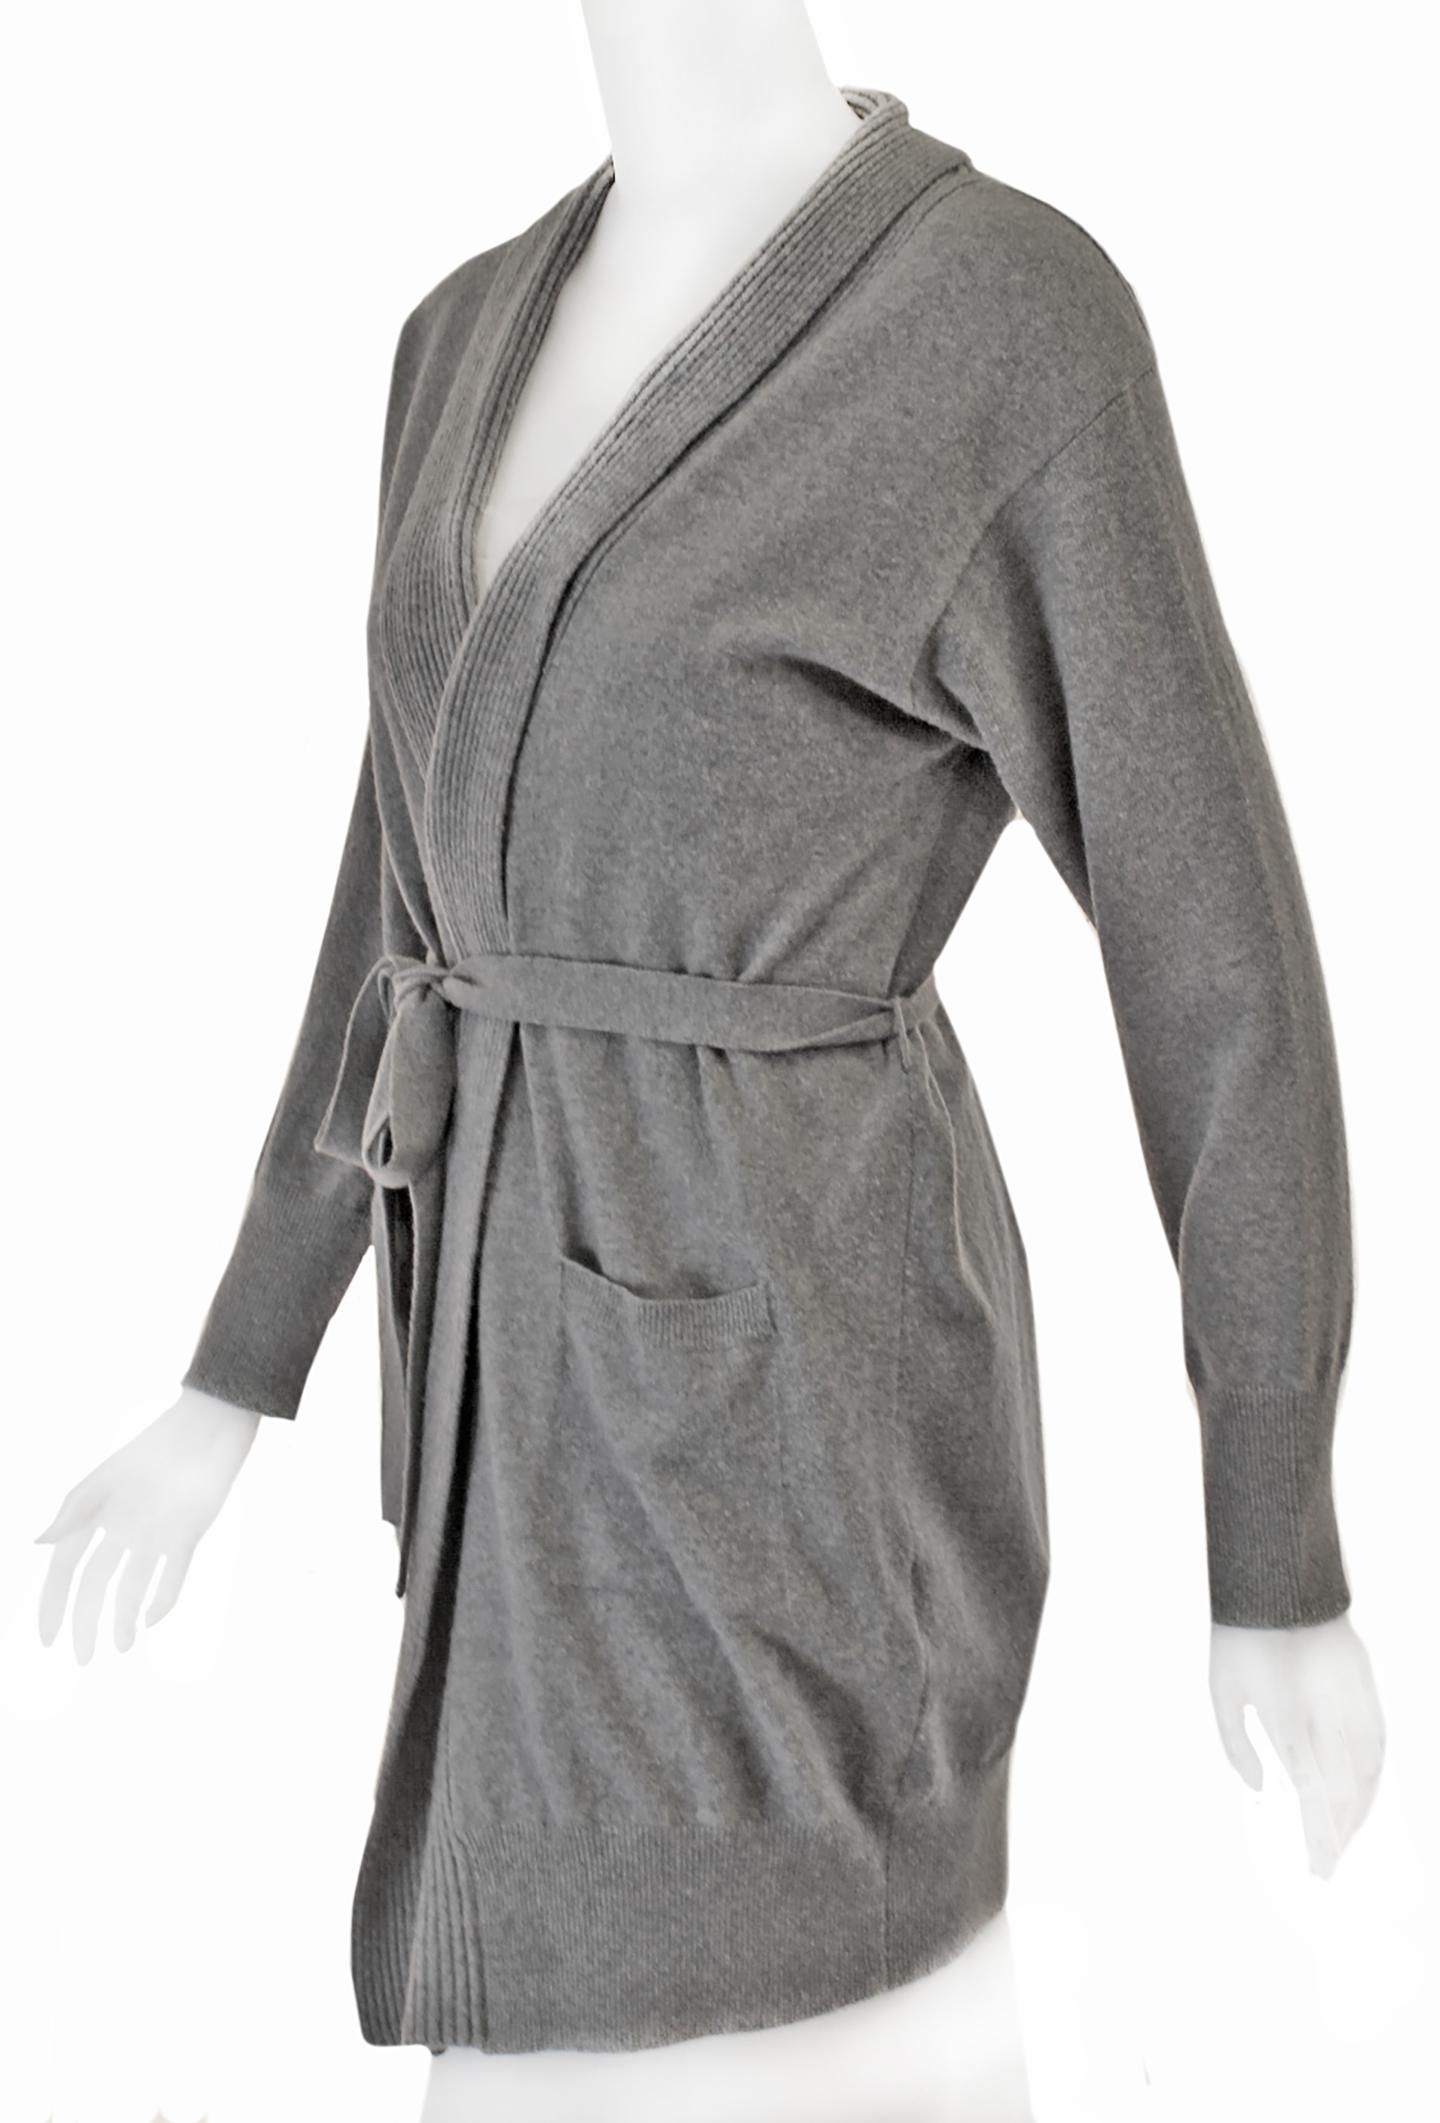 La Perla Grey Long Cardigan Sweater W/ Sash  In Excellent Condition For Sale In Palm Beach, FL